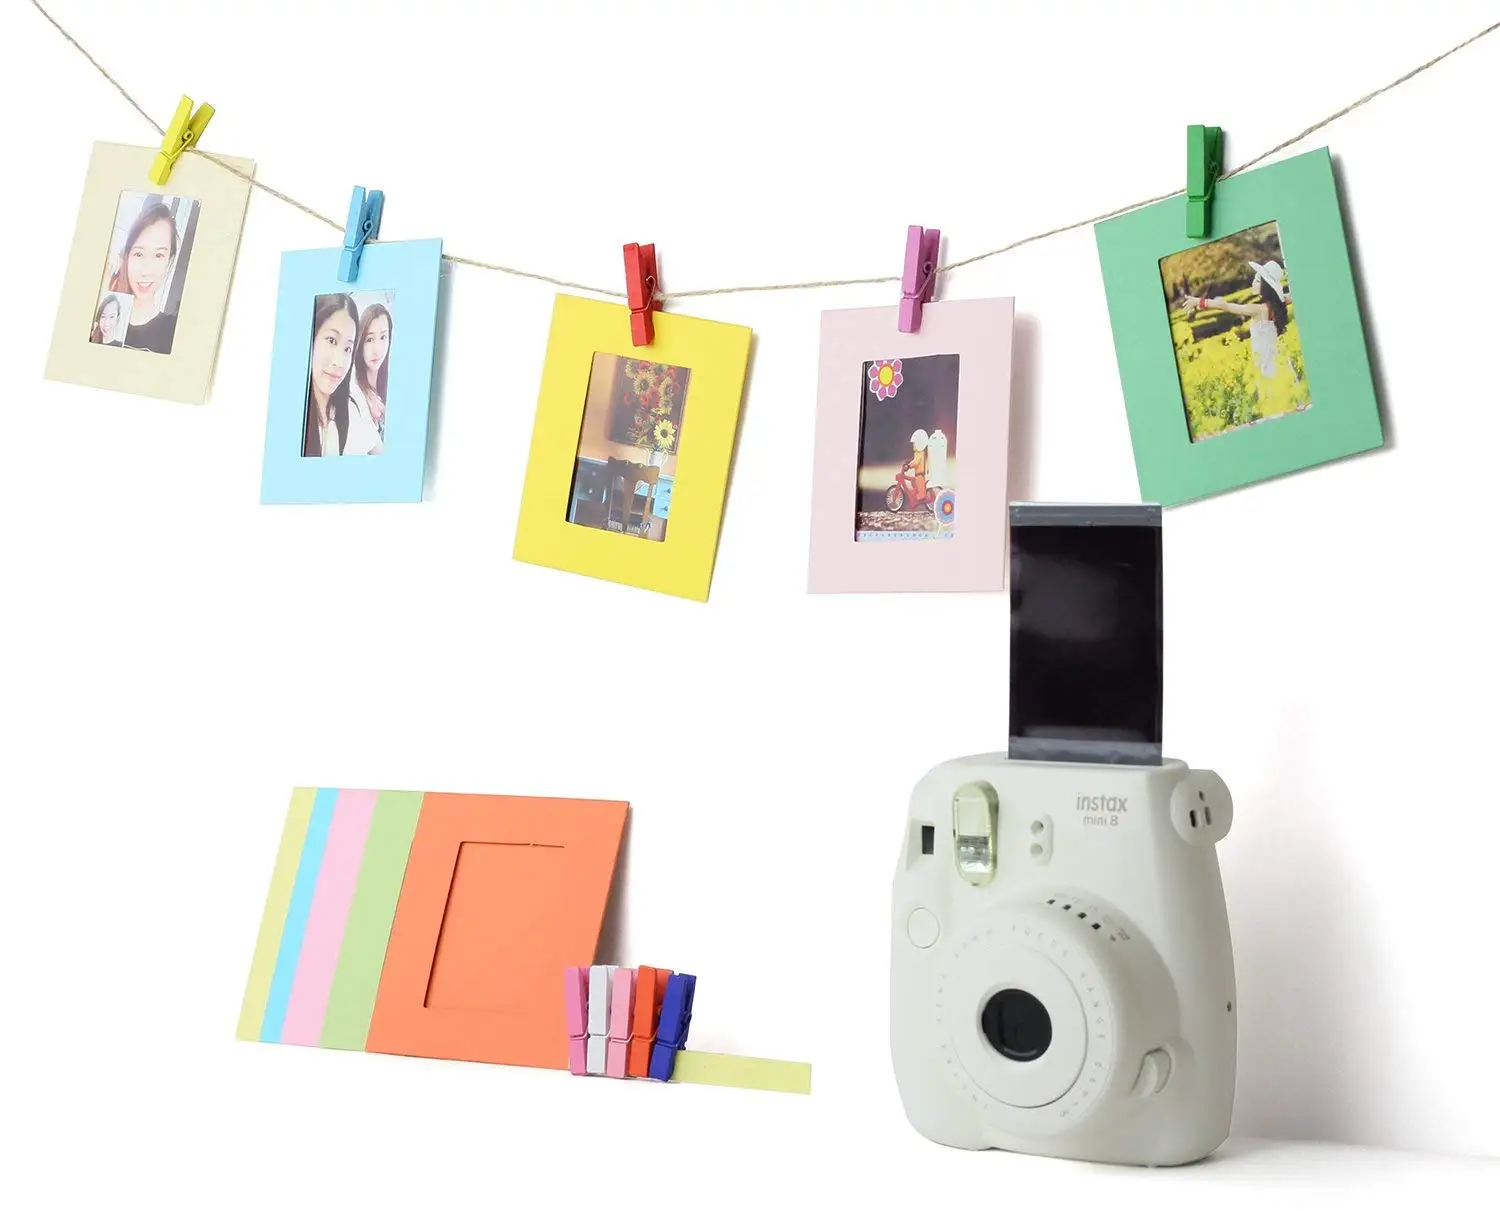 Fujifilm Instax Mini 9 8 7s мгновенная камера аксессуары набор 60 листов мини-пленка фотобумага настенные рамки наклейки пучки